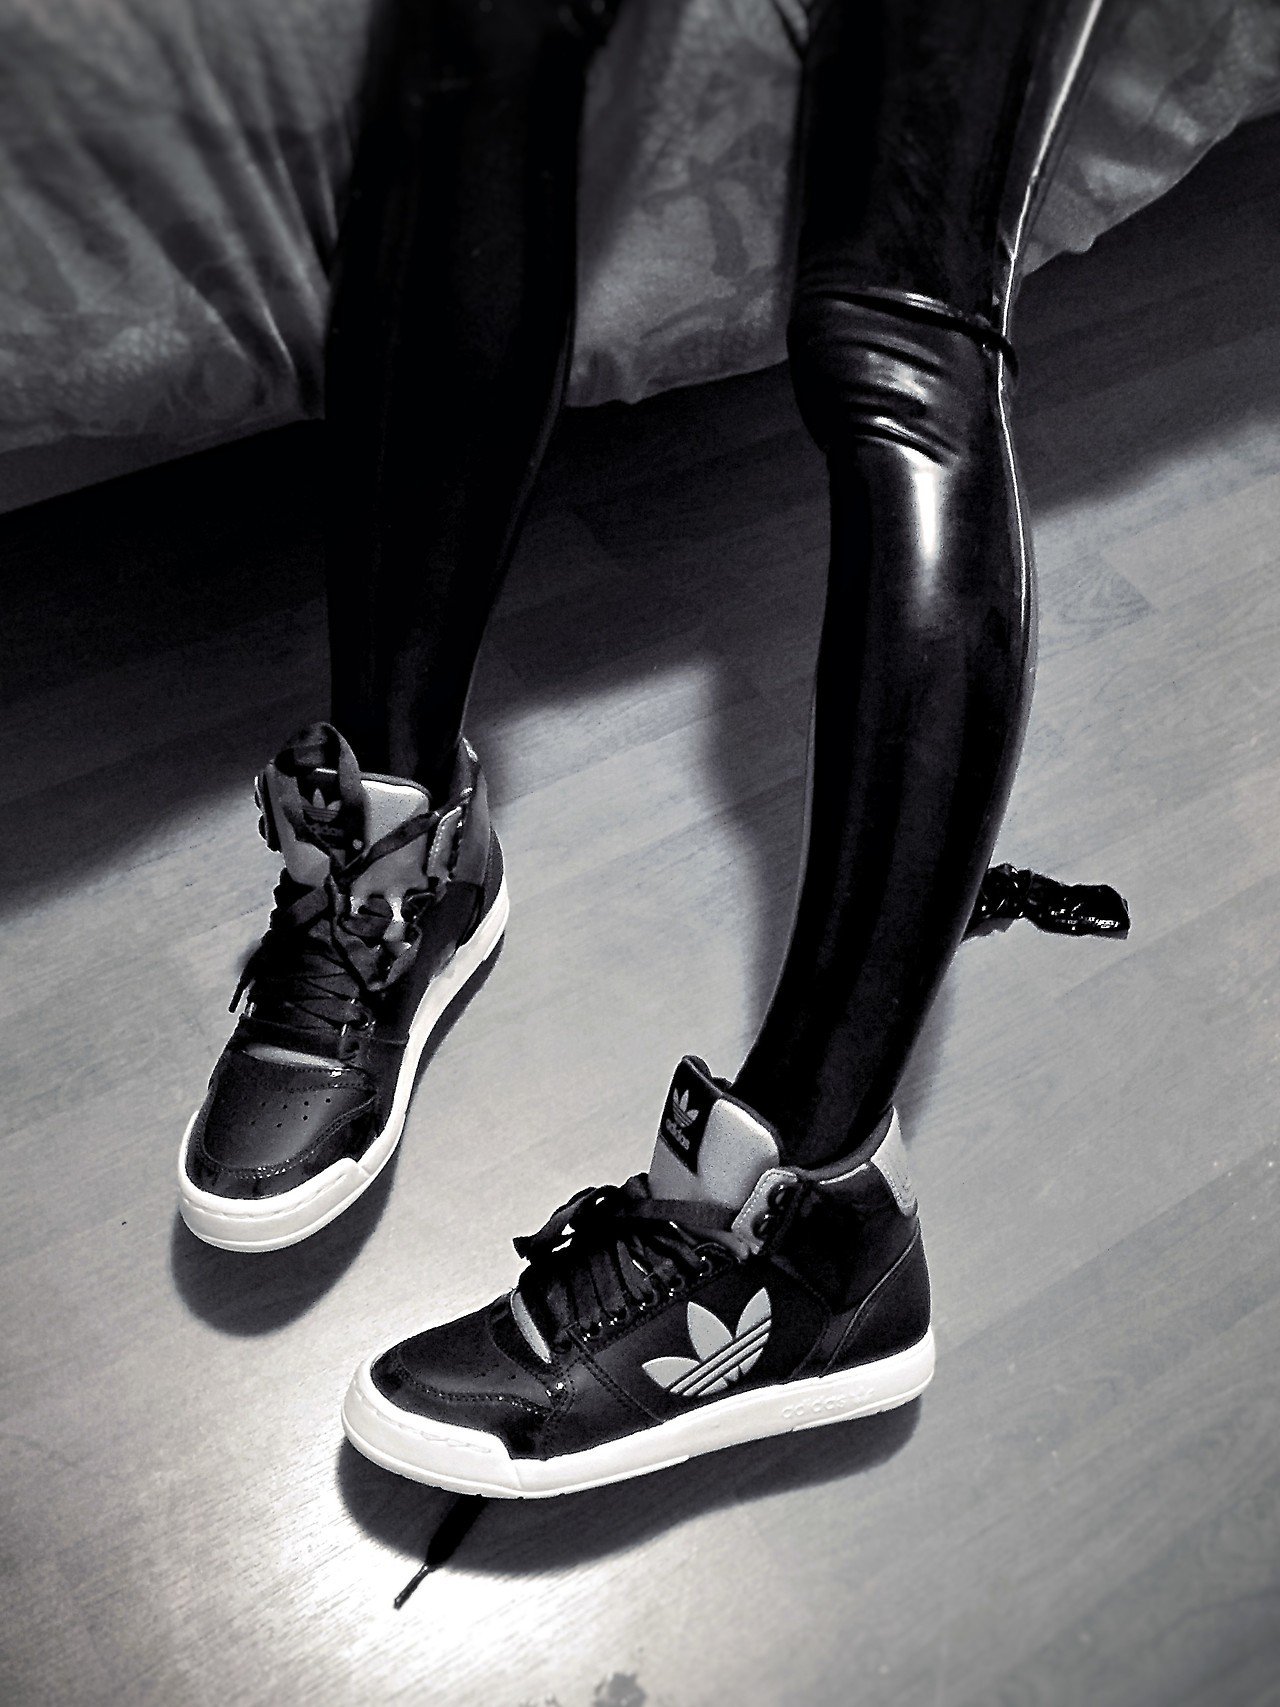 bue morfin regeringstid Latex kitscH on X: "#Sneakers &amp; #Latex by #Sneakersfetish #latex  #rubber #model #fetish #alternative #fashion #cosplay #kink #vintage #show  #look https://t.co/B92FWYJ72r" / X